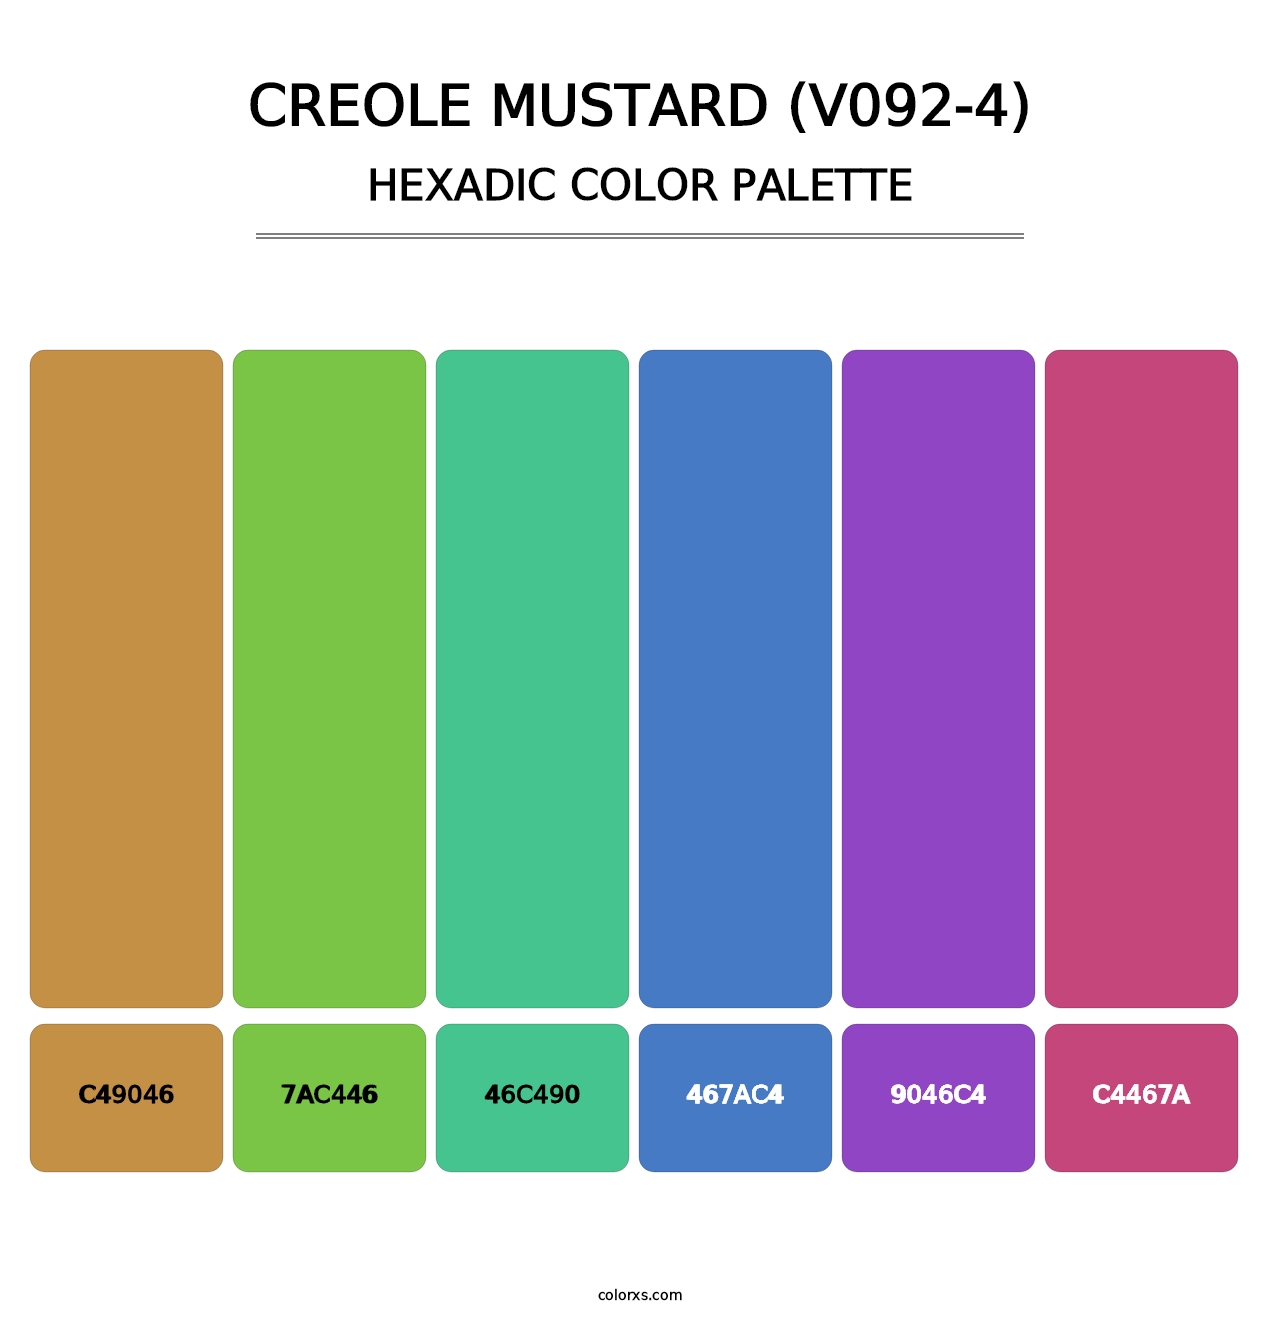 Creole Mustard (V092-4) - Hexadic Color Palette